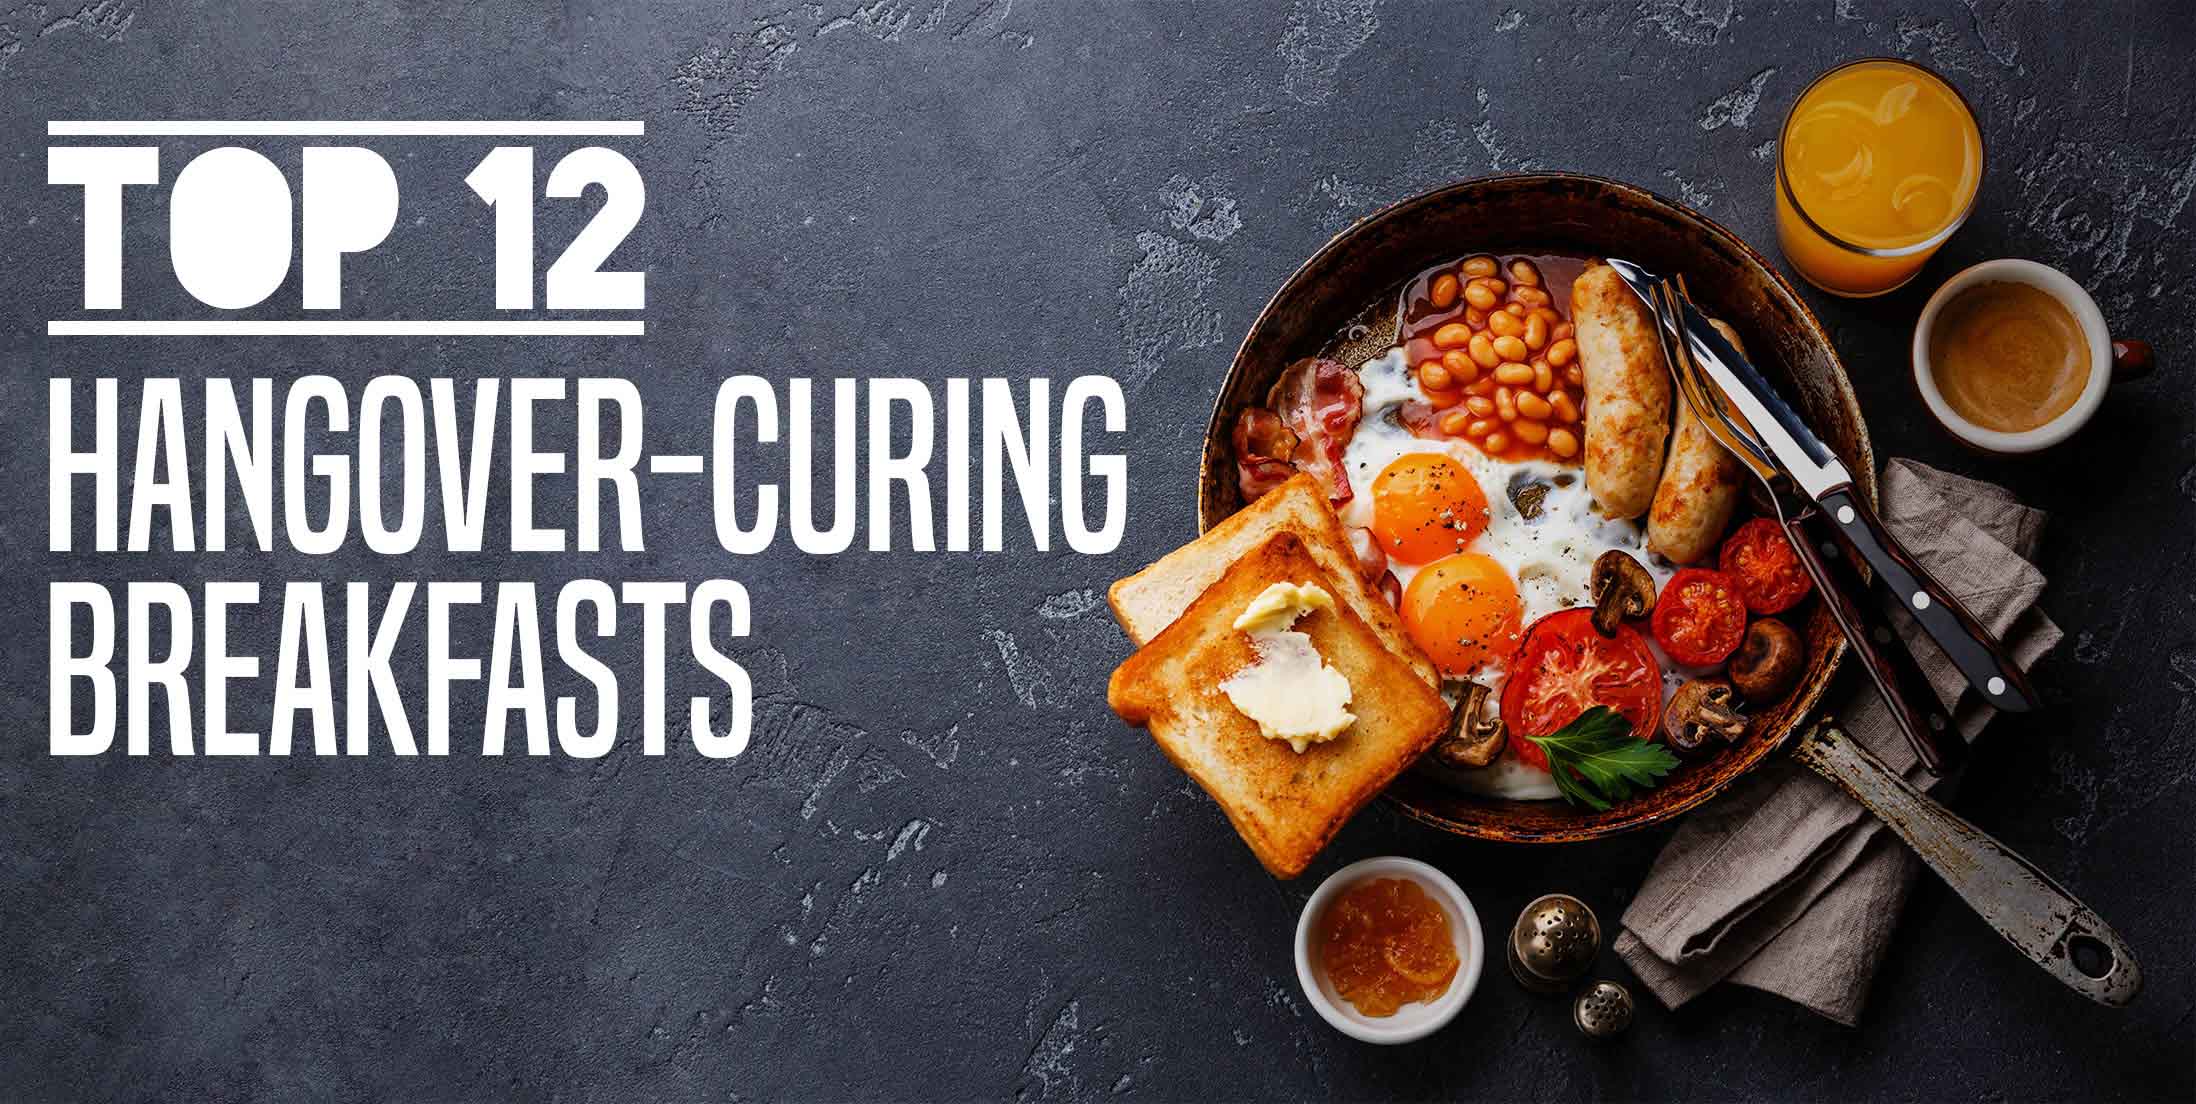 Top 12 Hangover Curing Breakfasts